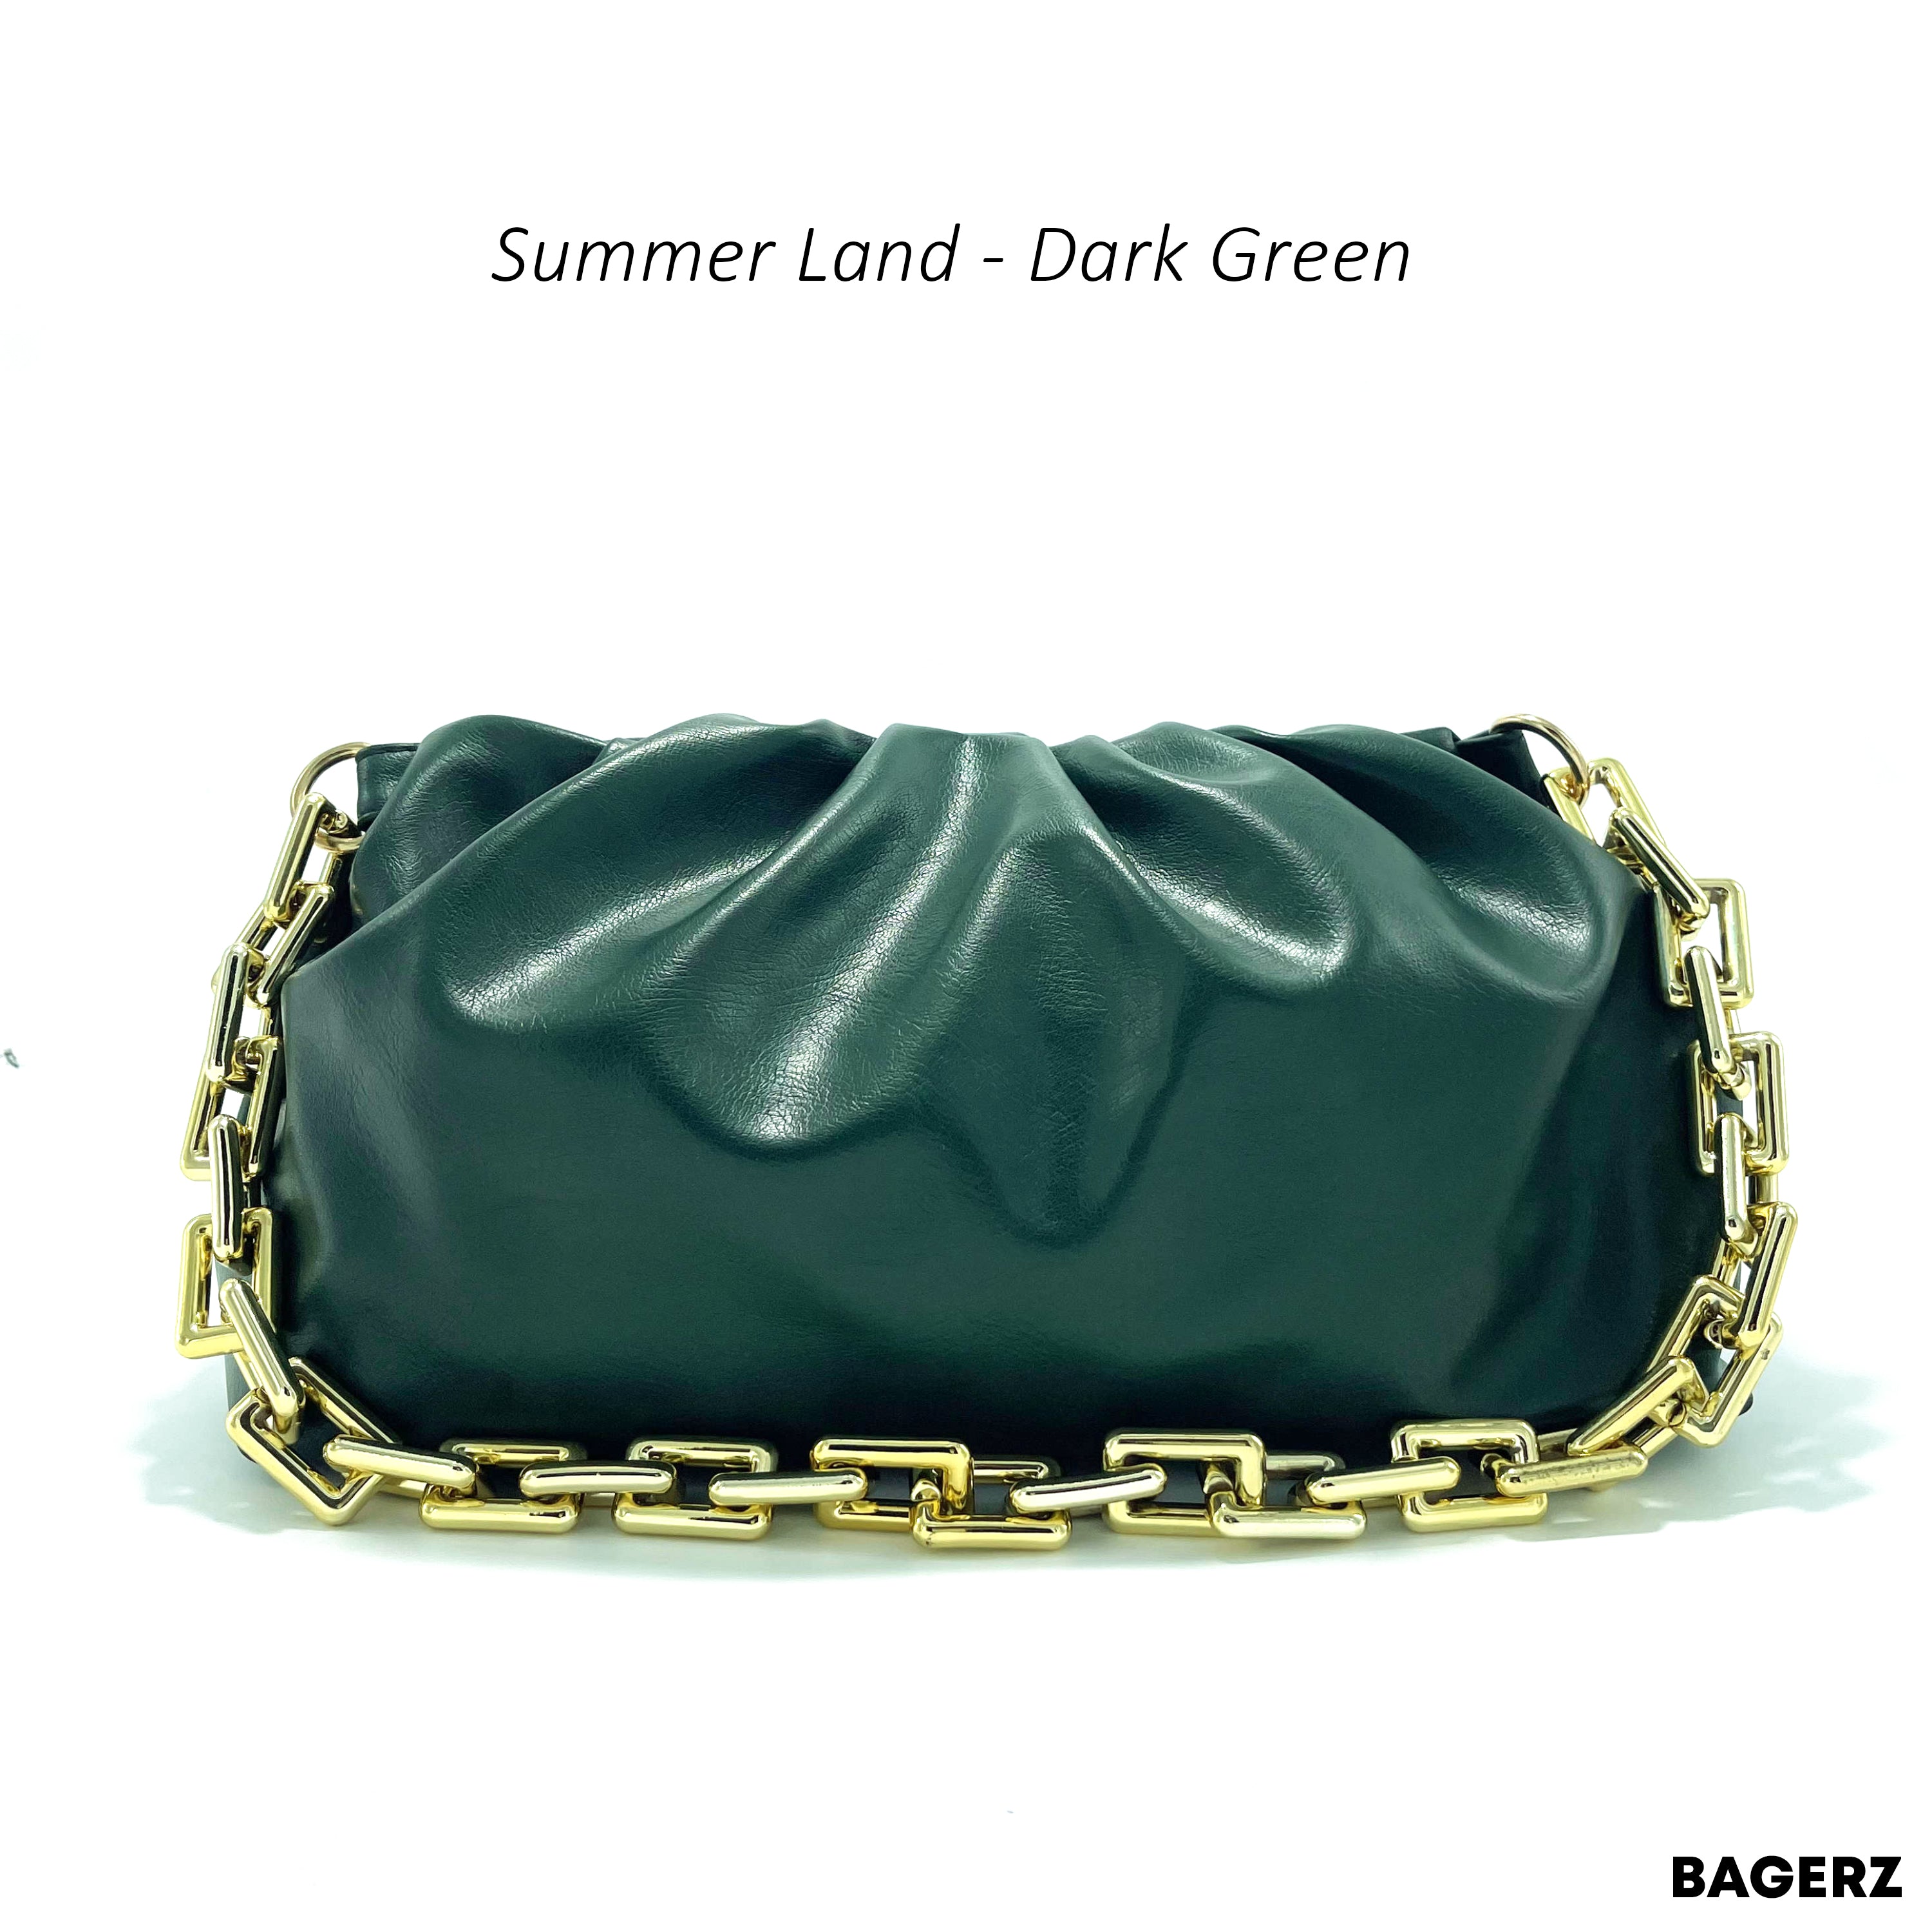 Summer Land - Dark Green